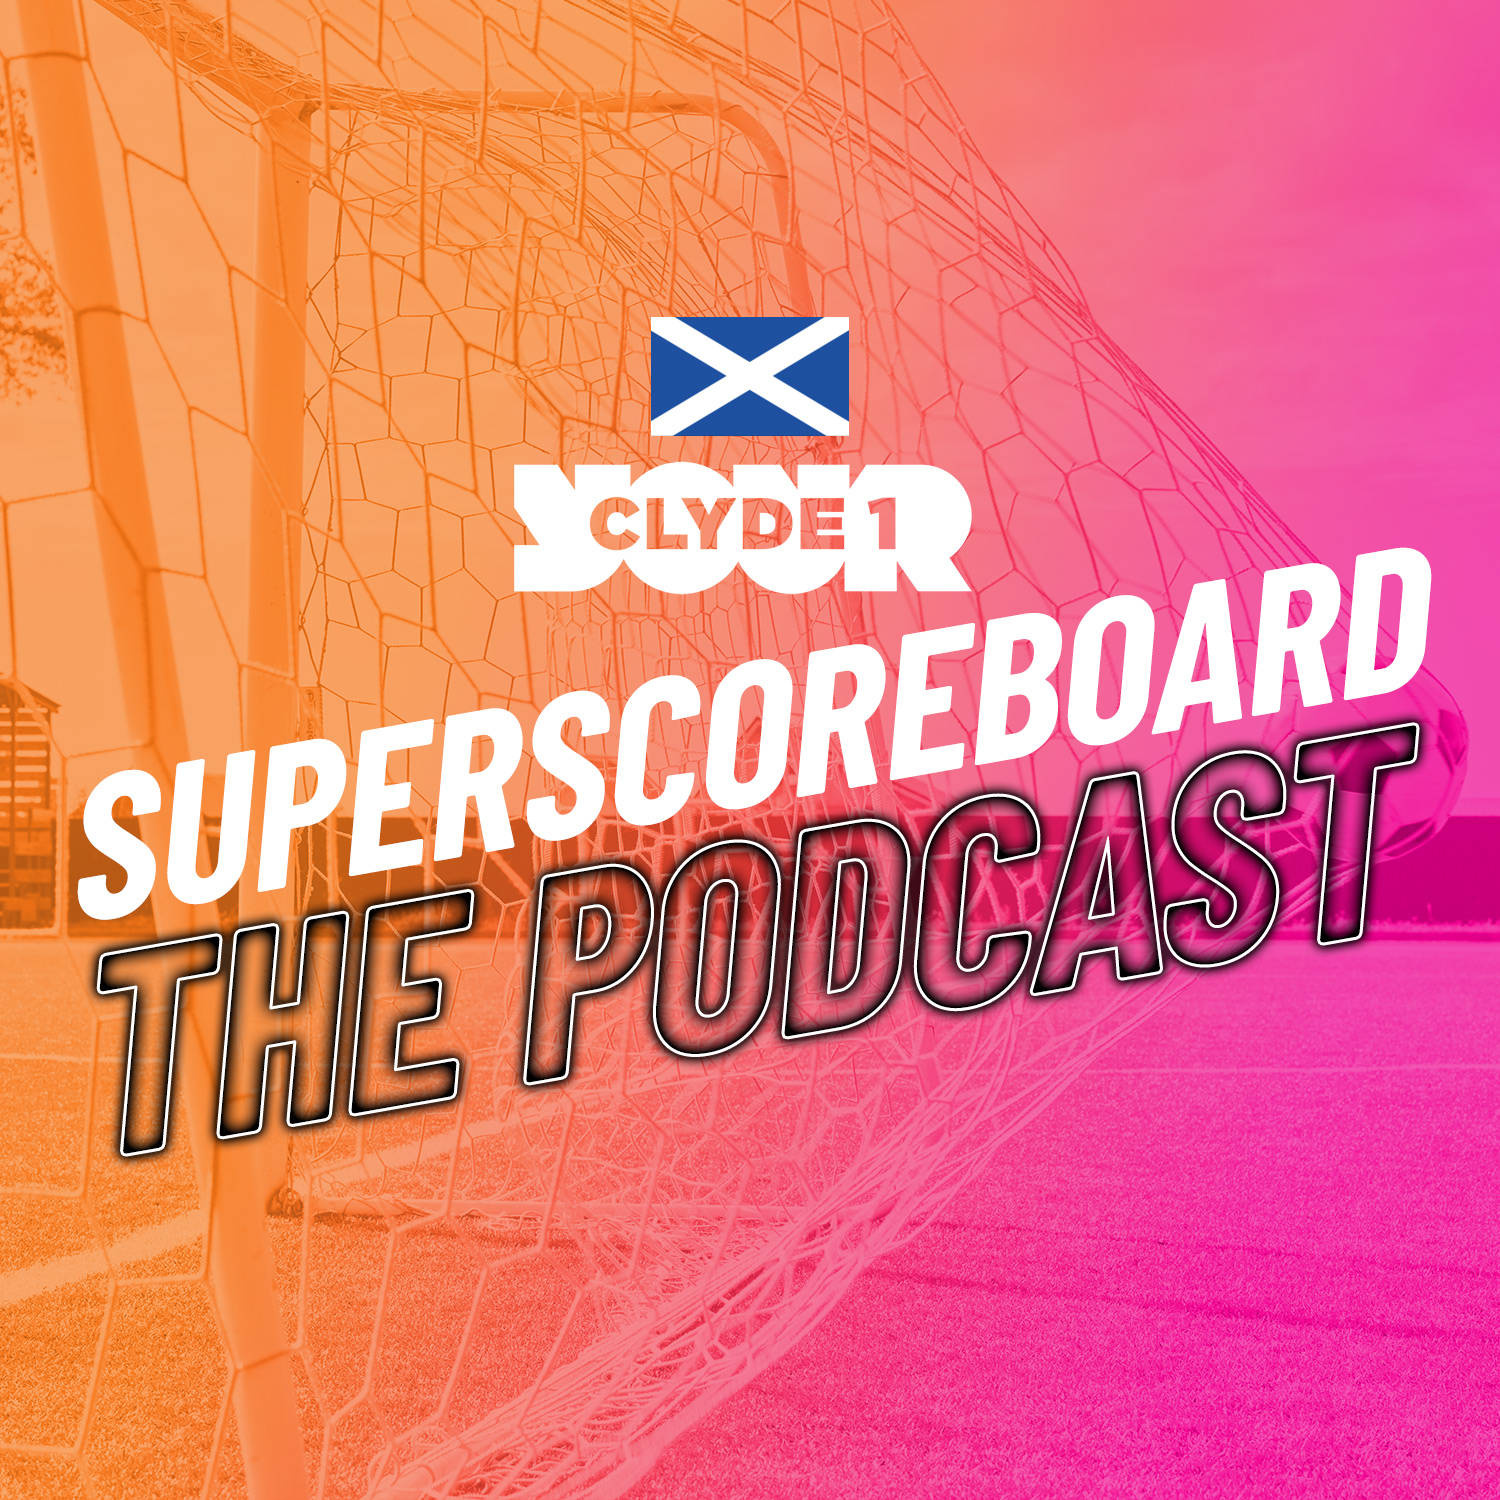 Saturday 23rd December Clyde 1 Superscoreboard